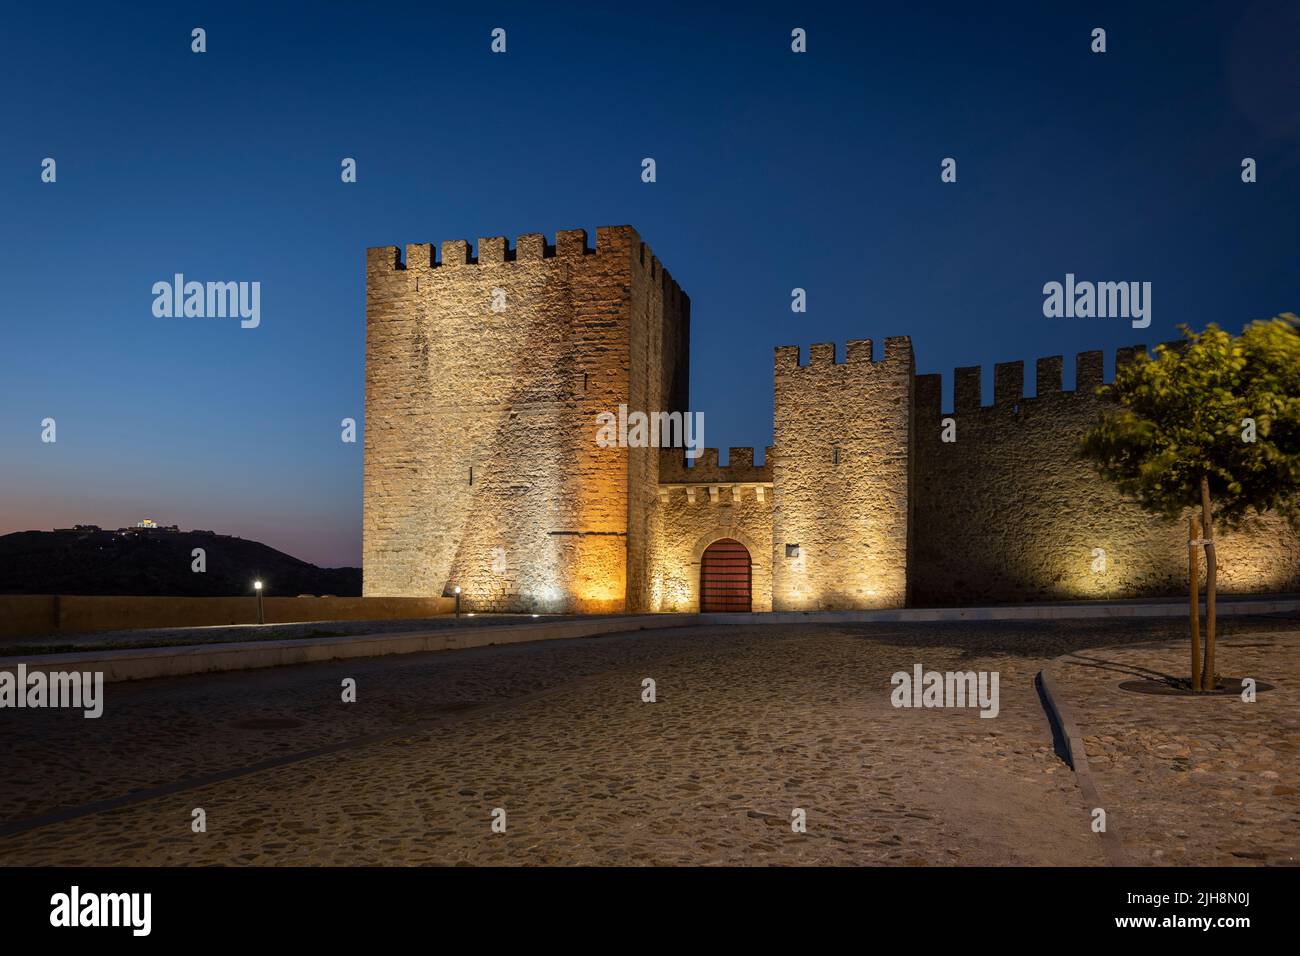 Elvas, Portugal: Castelo of Elvas. Blue hour / twilight shot. Stock Photo